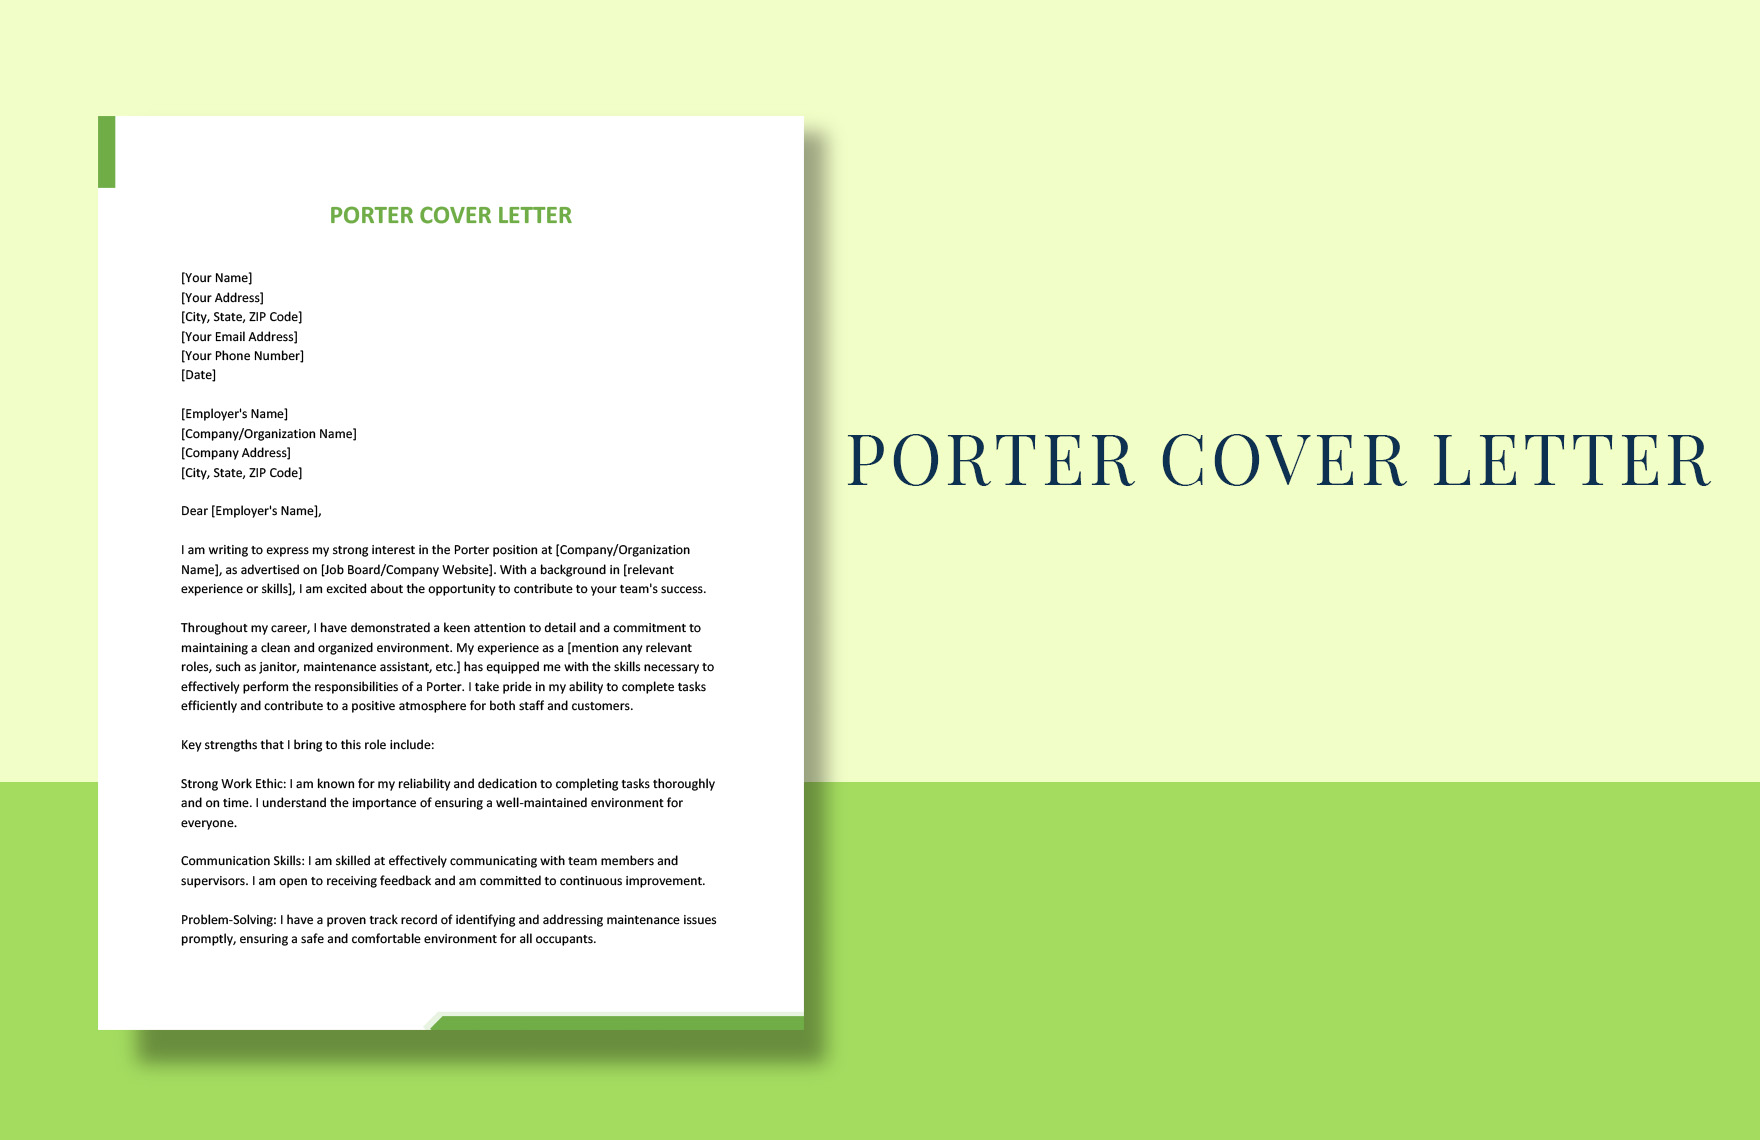 Porter Cover Letter in Word, Google Docs